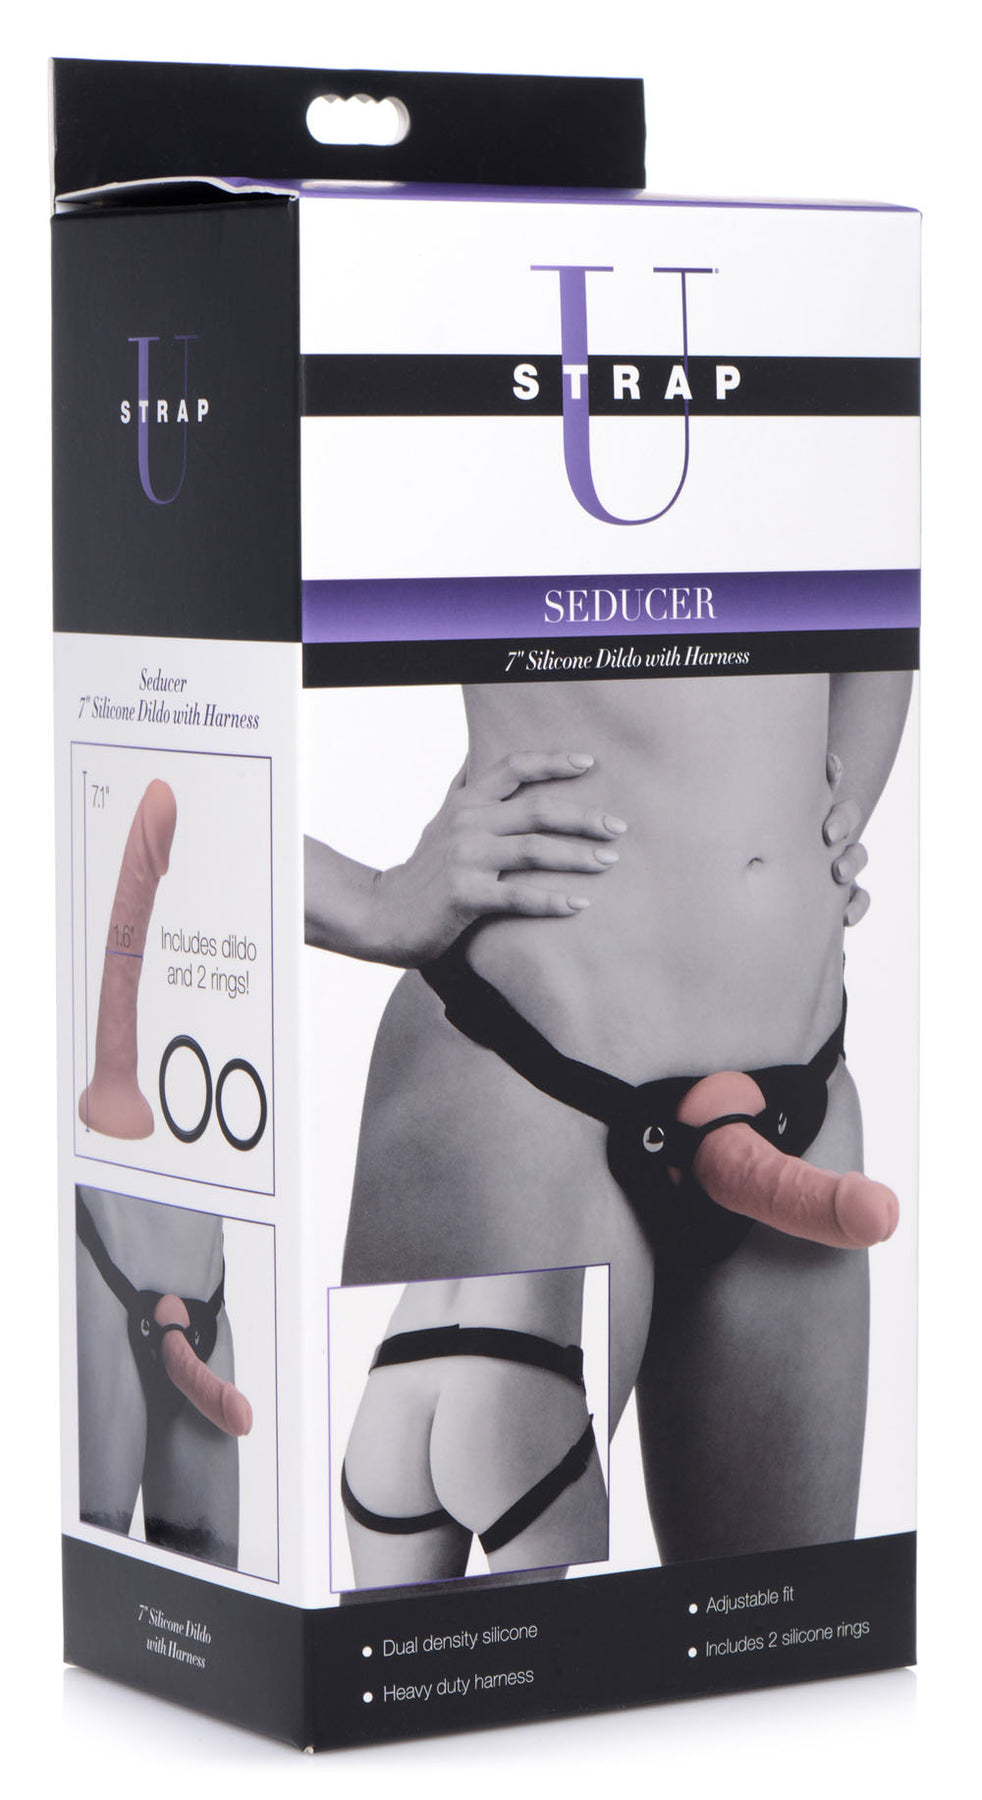 Seducer 7 Inch Silicone Dildo With Harness